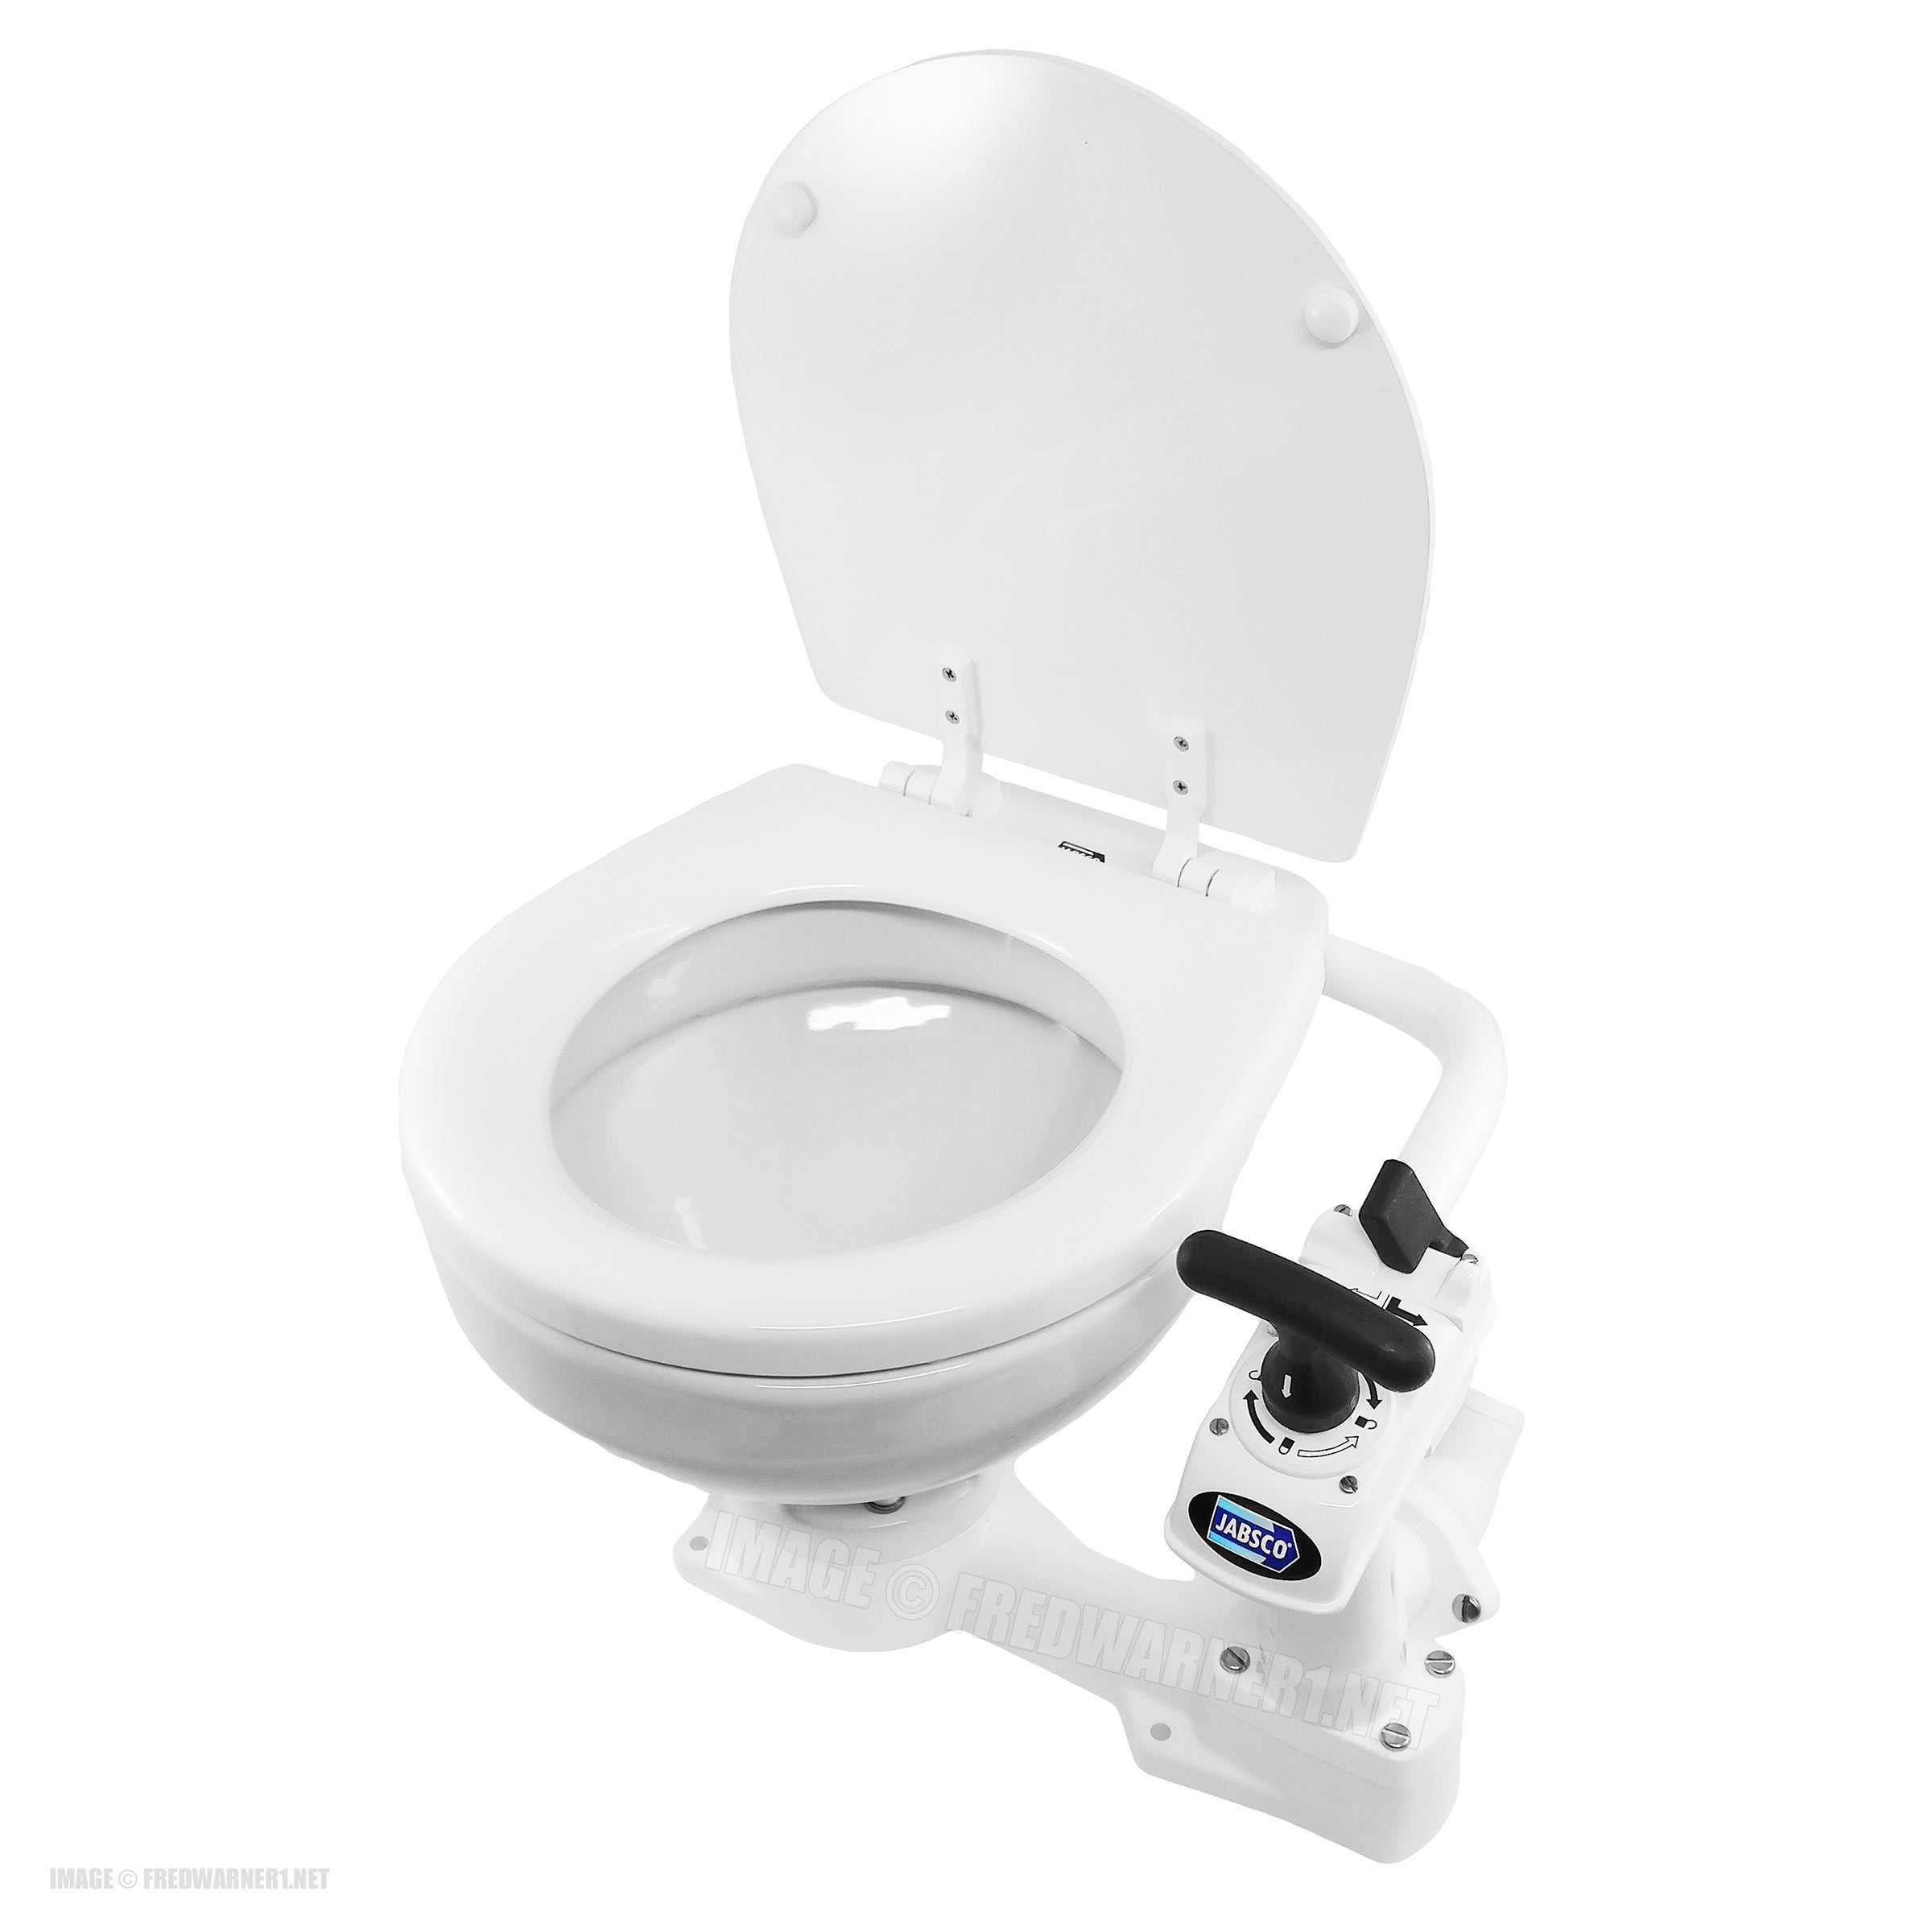 jabsco toilet manual pdf